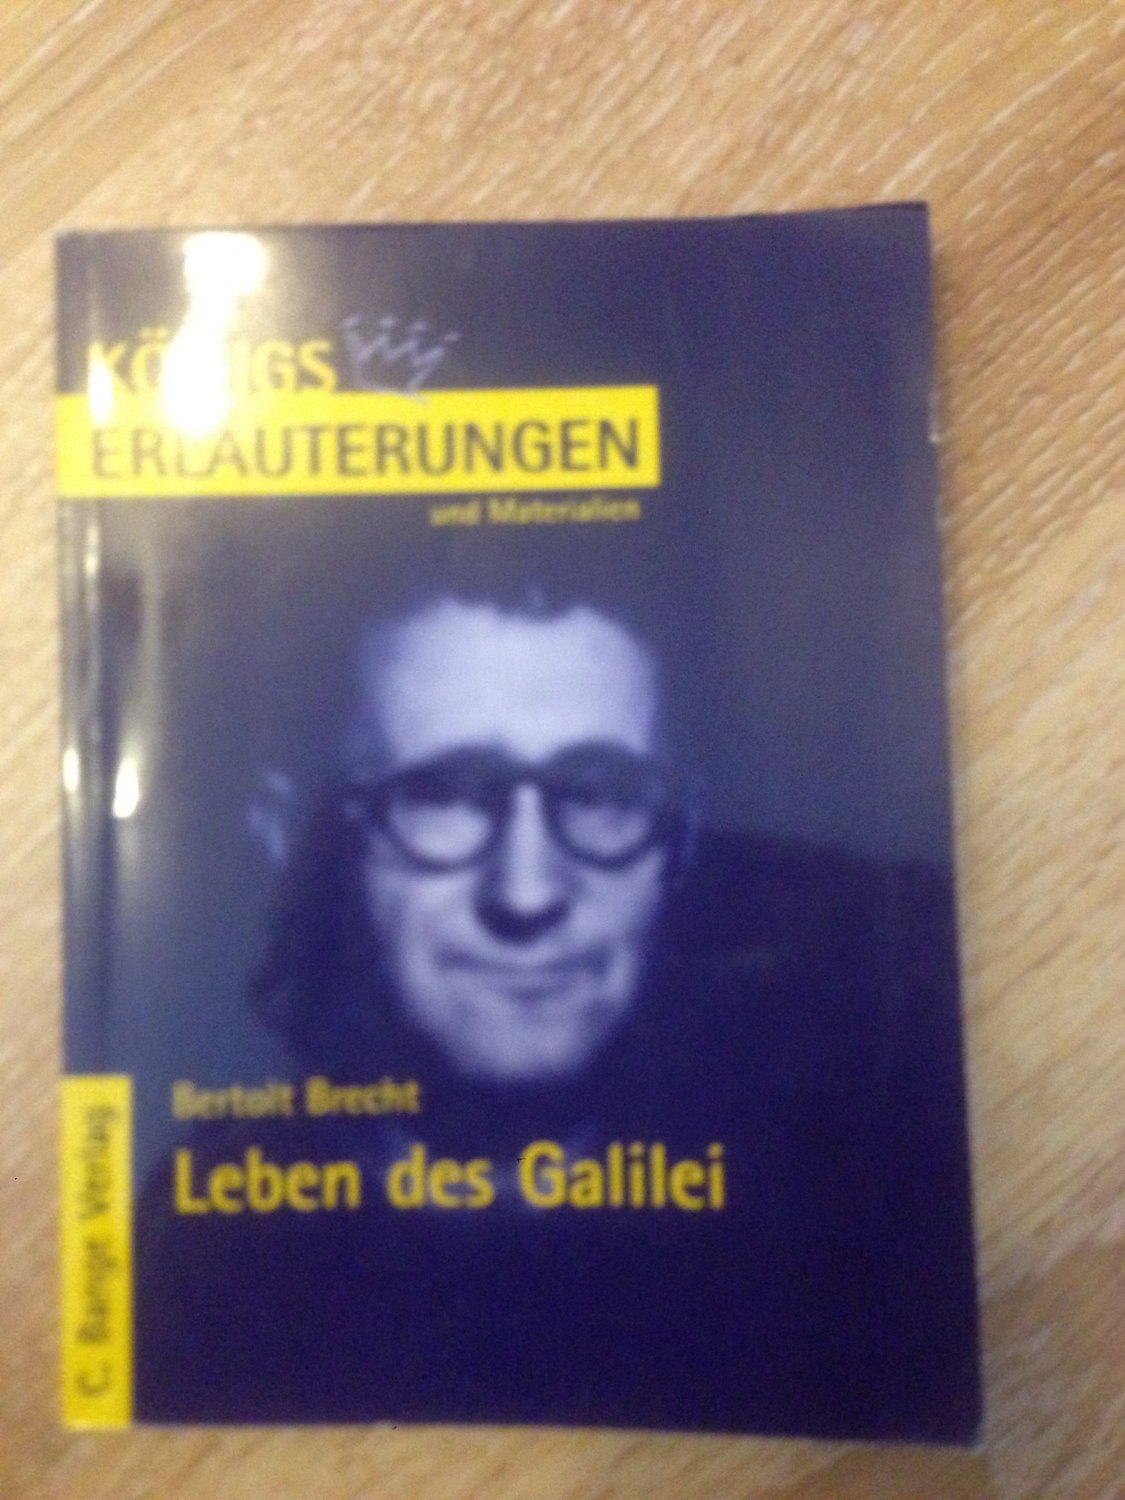 ISBN 9783804417281 "Königs Erläuterungen: Interpretation zu Brecht